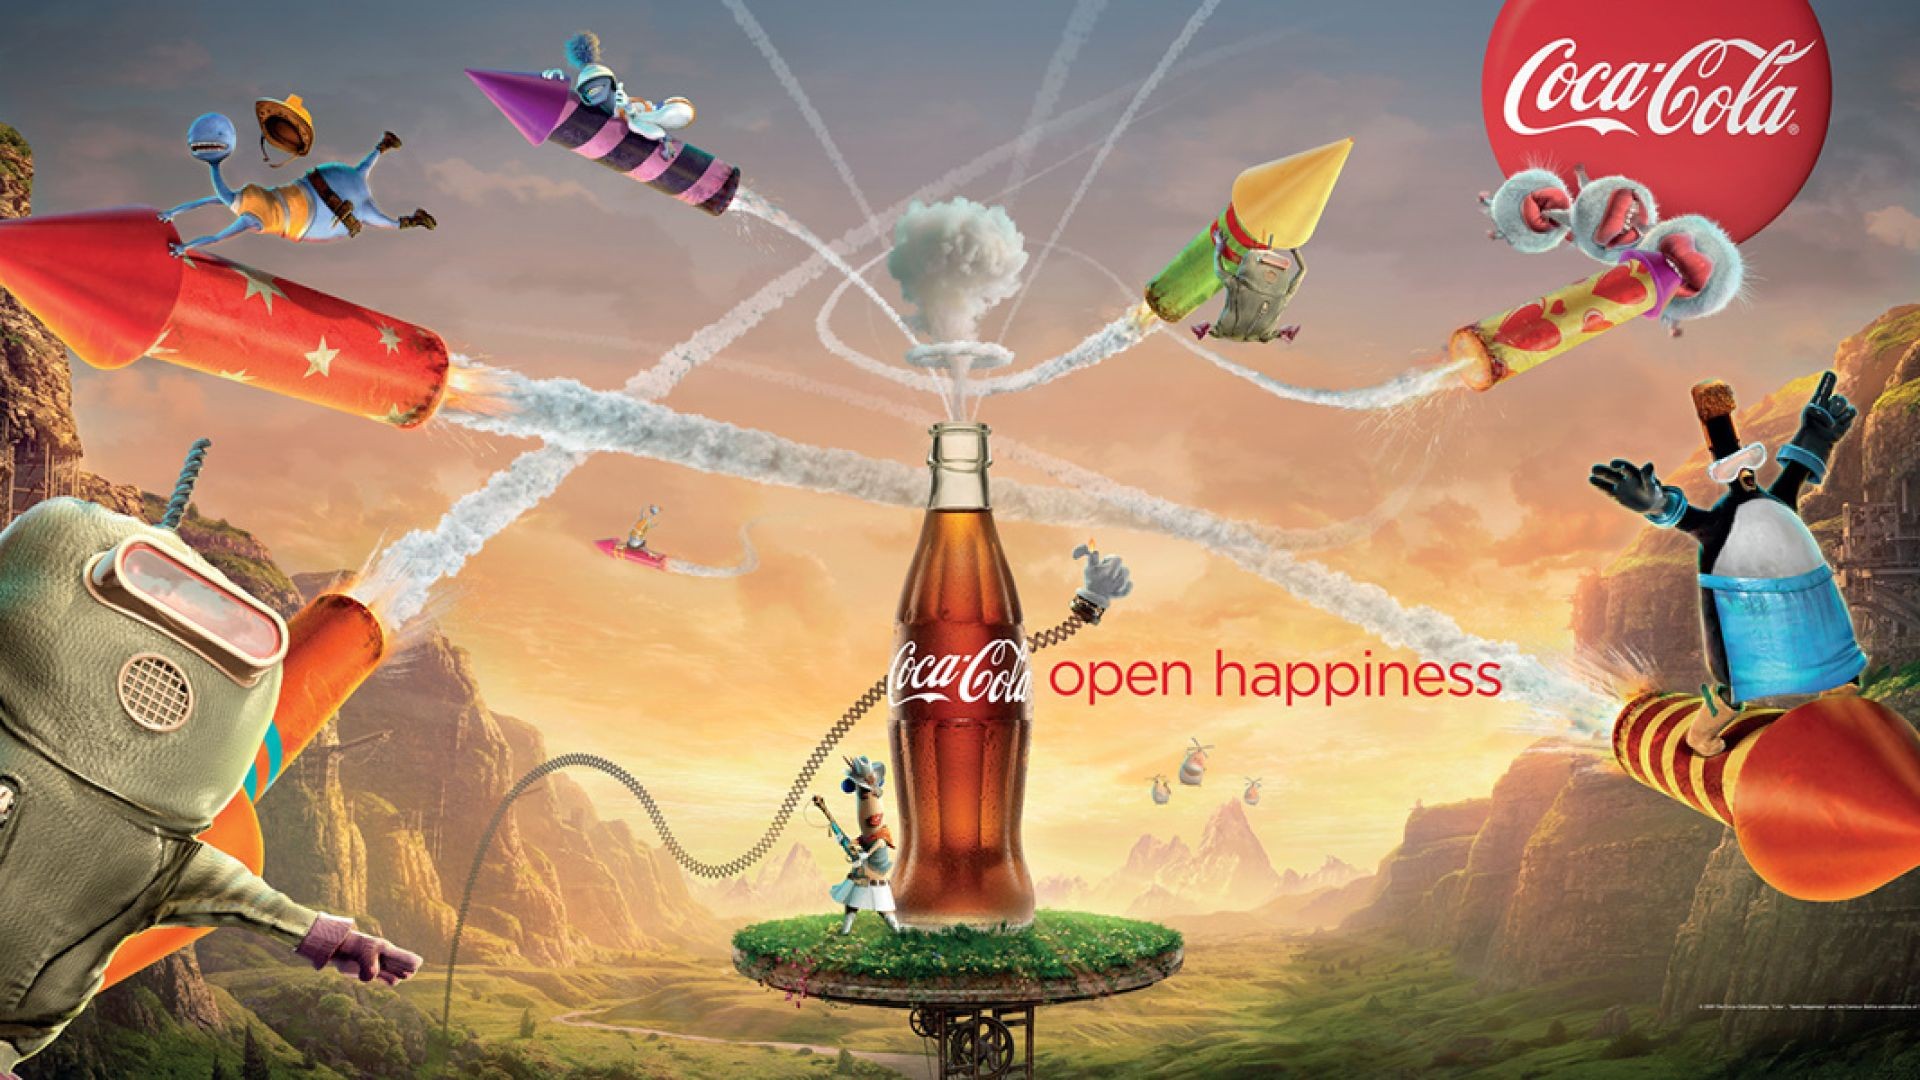 Coca-Cola - Happiness Factory 1